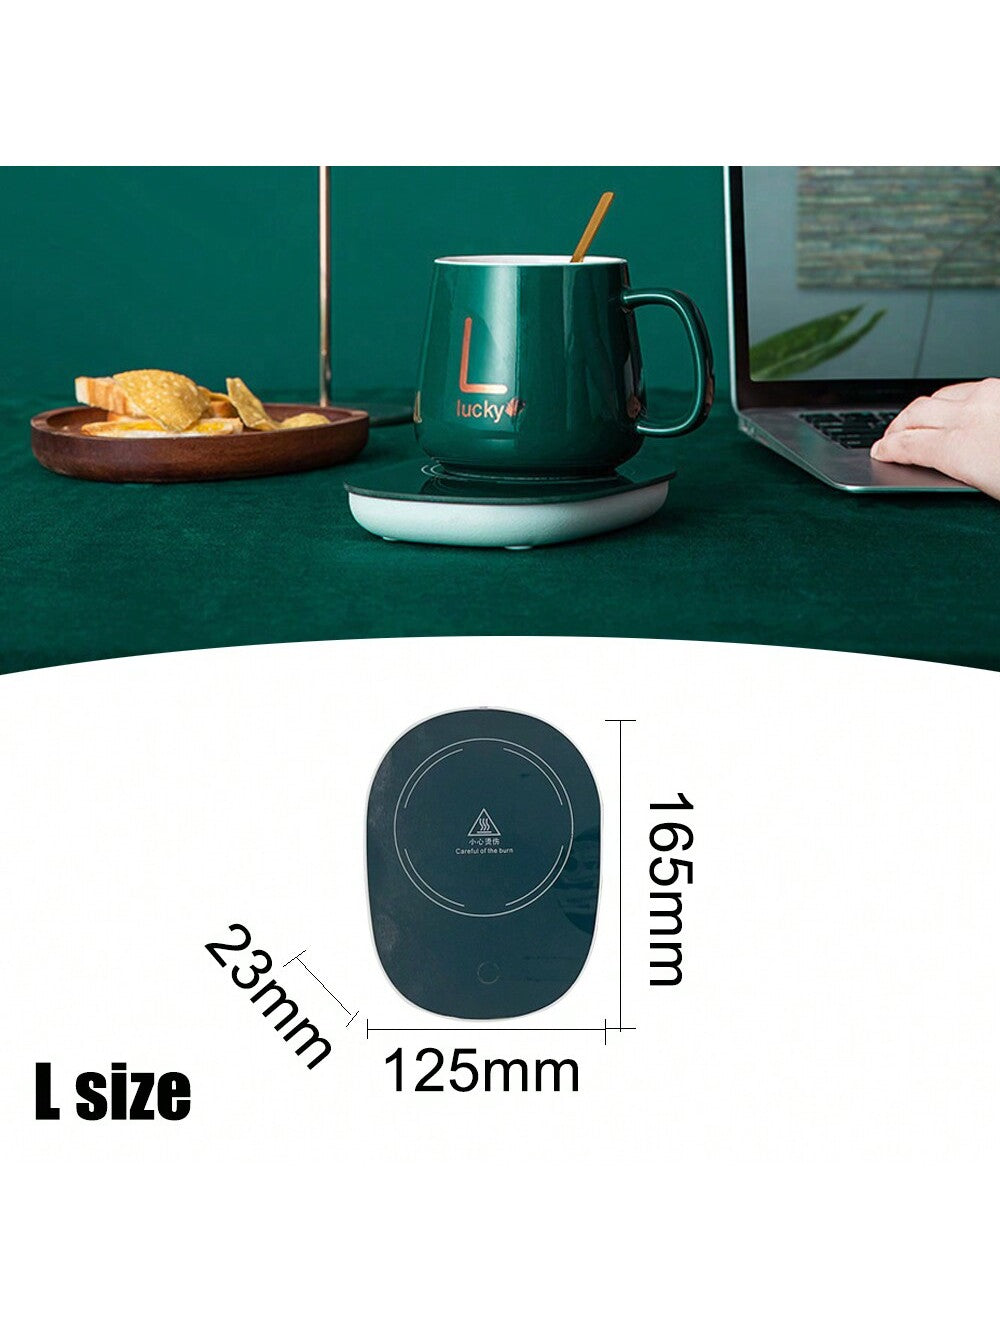 Electric Mug Warmer, Heated Coffee Mug Cup Coaster, Warmer Pad USB